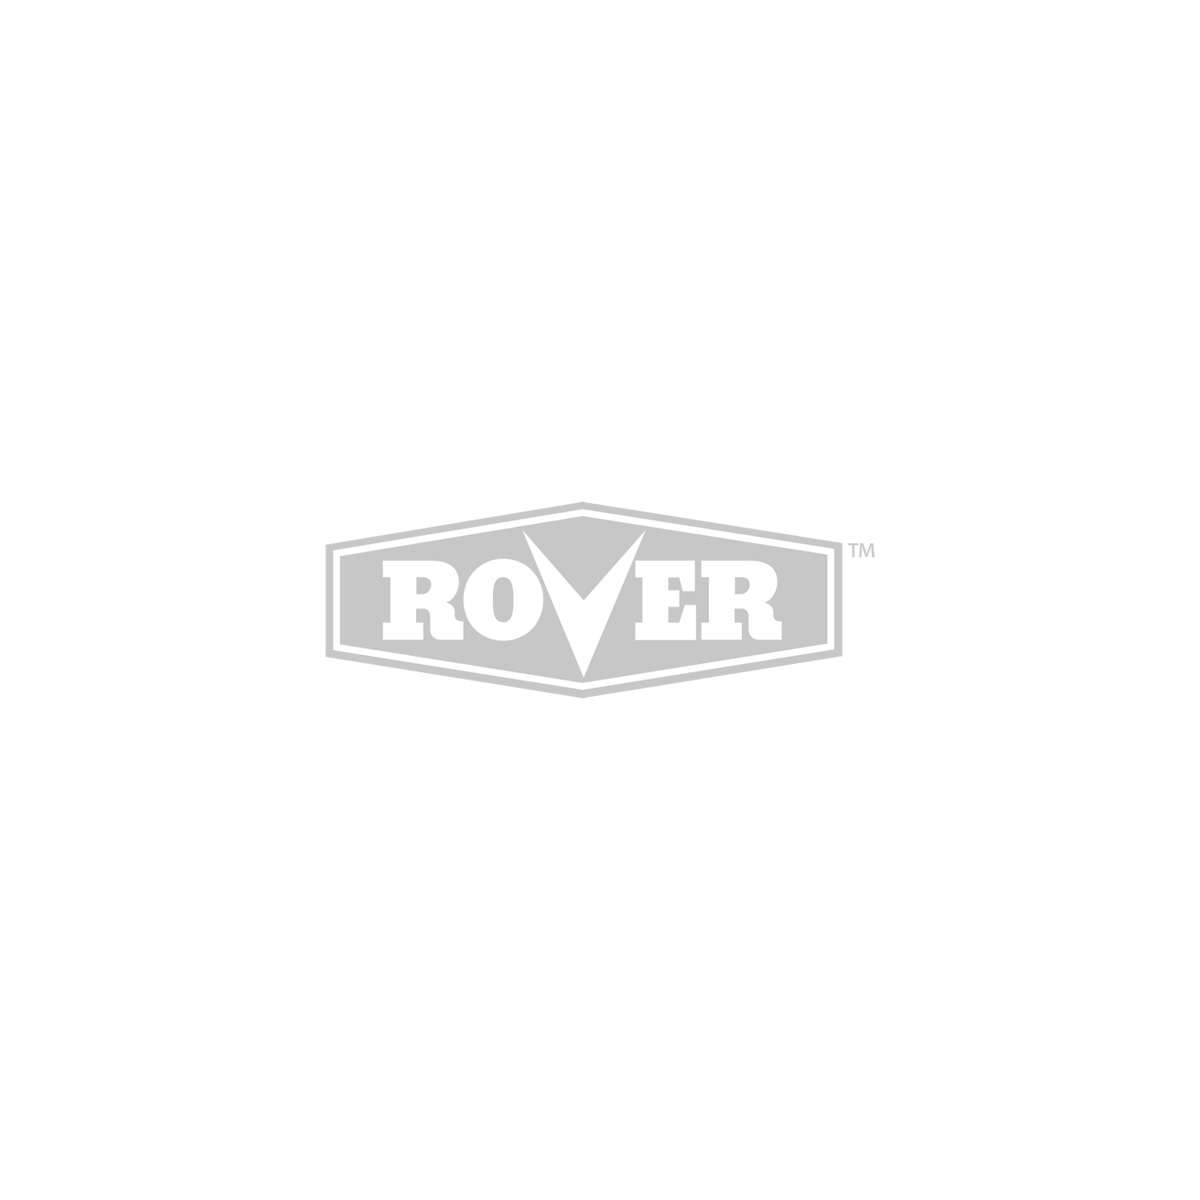 Rover 5cm (2